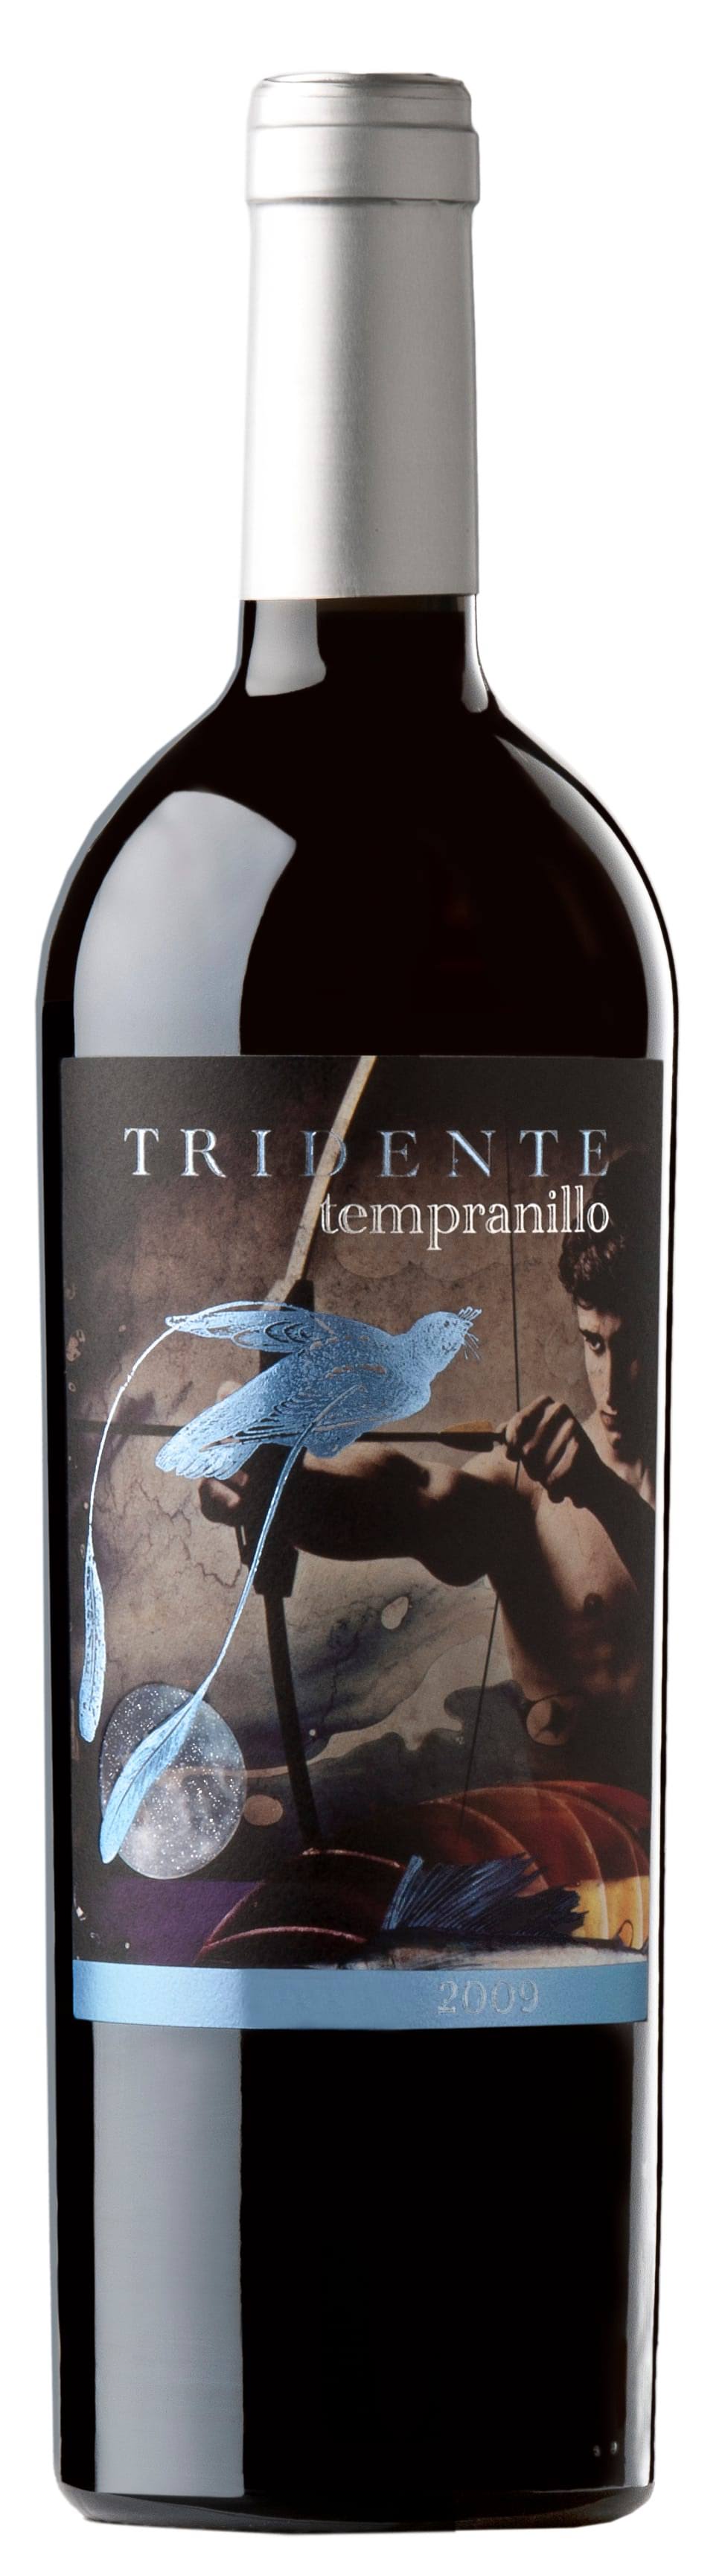 Bodegas Triton Tempranillo Tridente, Castilla Y Leon (Vintage Varies) - 750 ml bottle